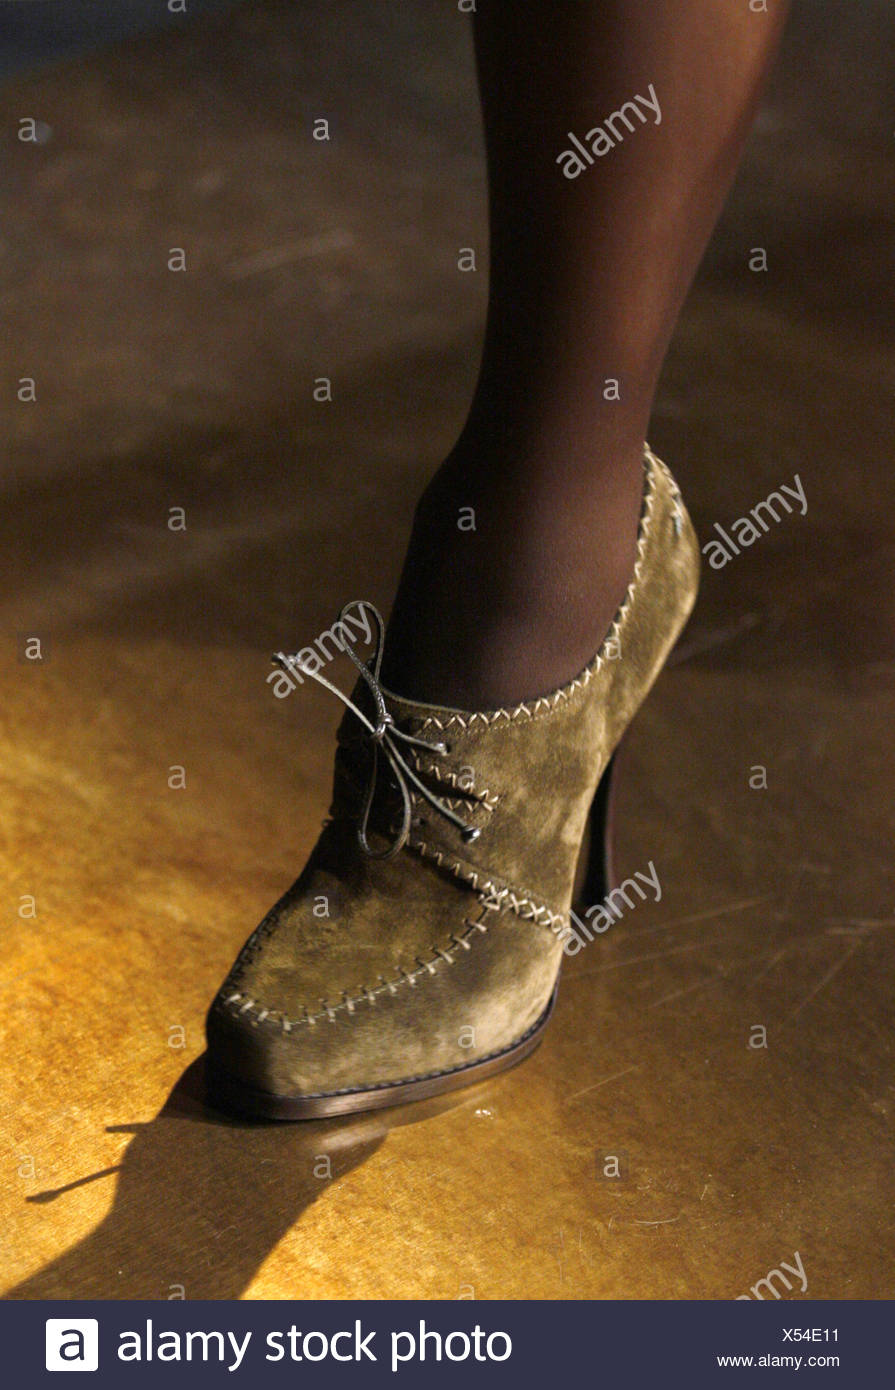 donna karan new york shoes